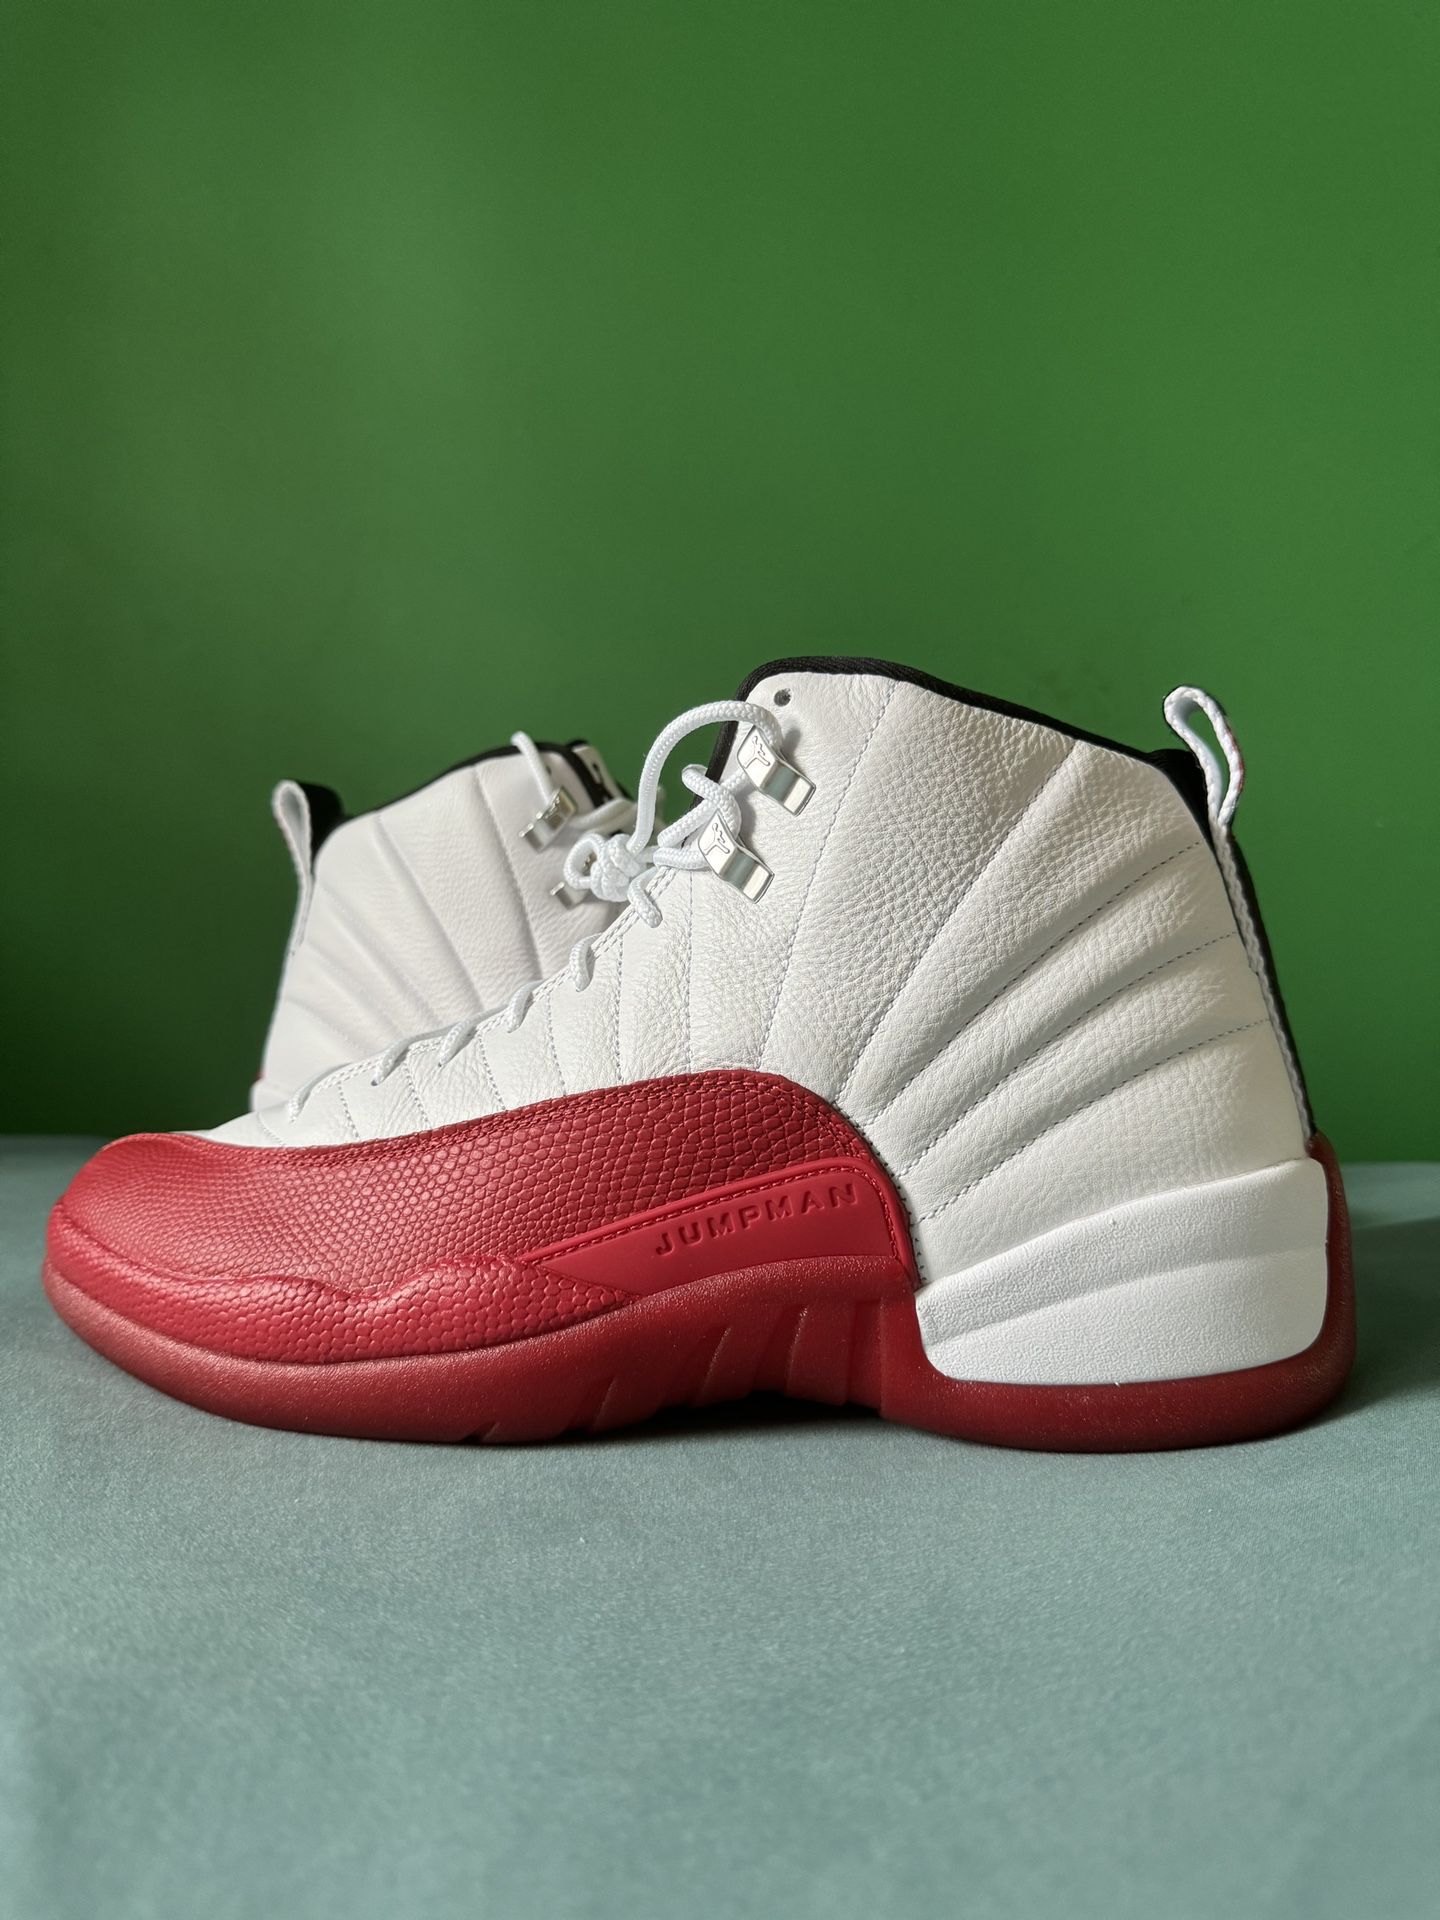 Nike Air Jordan 12 Cherry Size 13